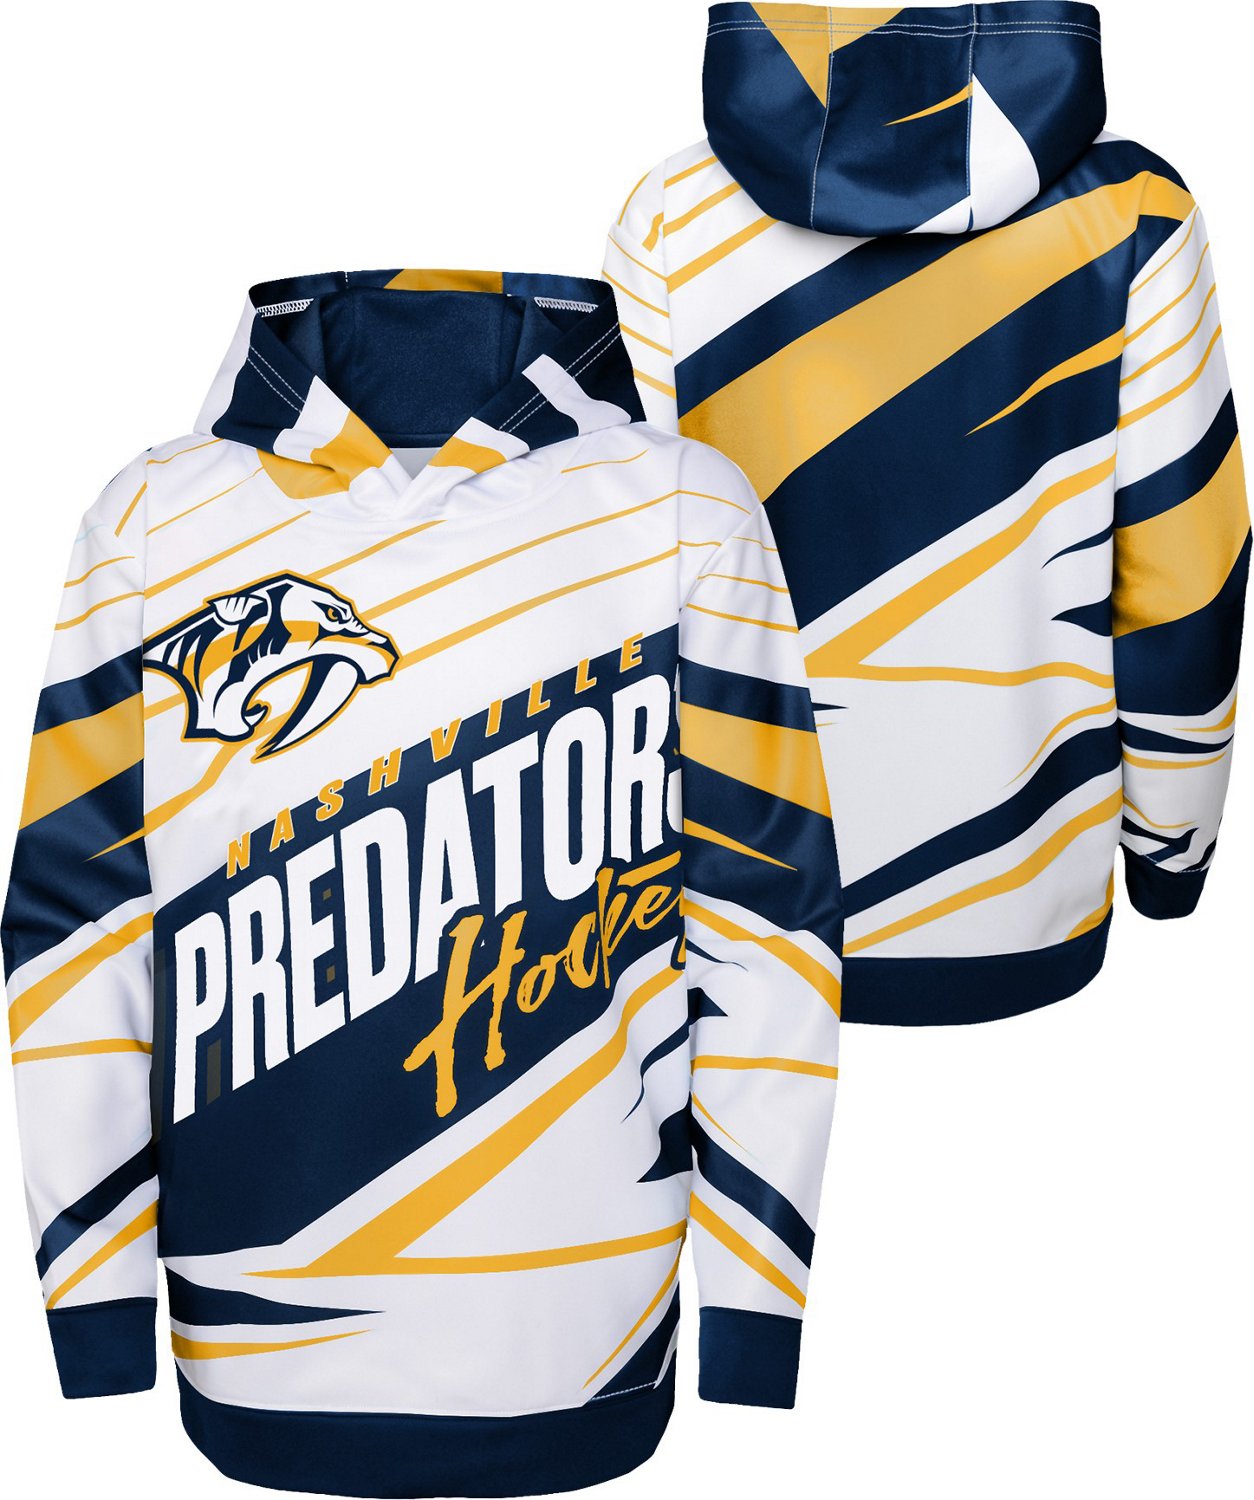 Nashville Predators Clothing